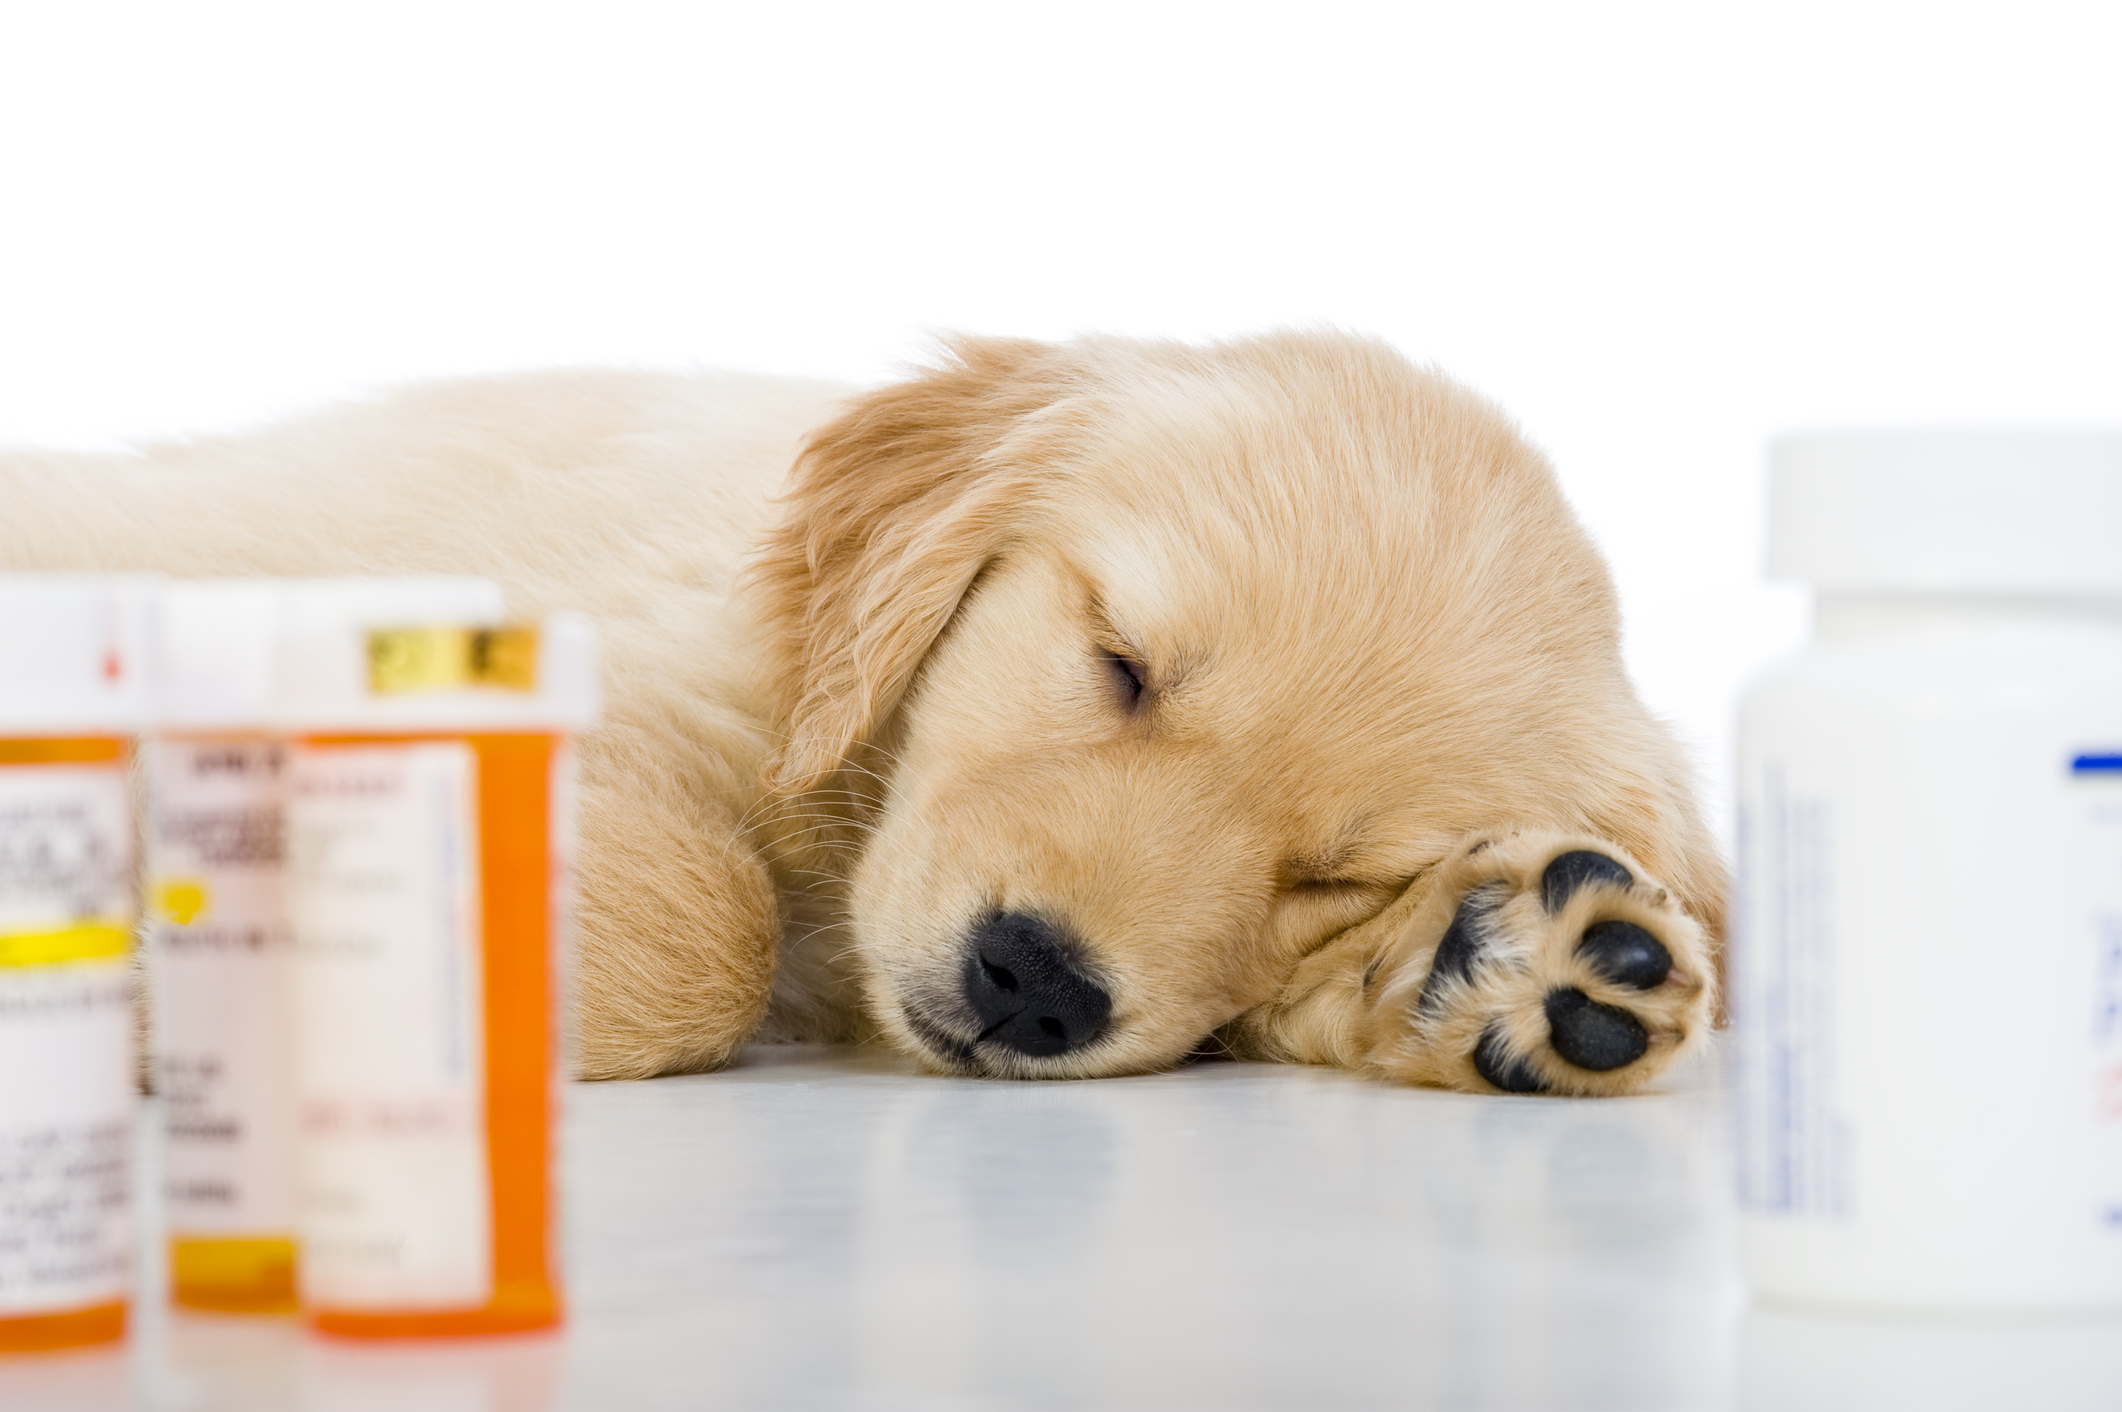 Cute golden retriever puppy sleeps on the veterinarian's examining table